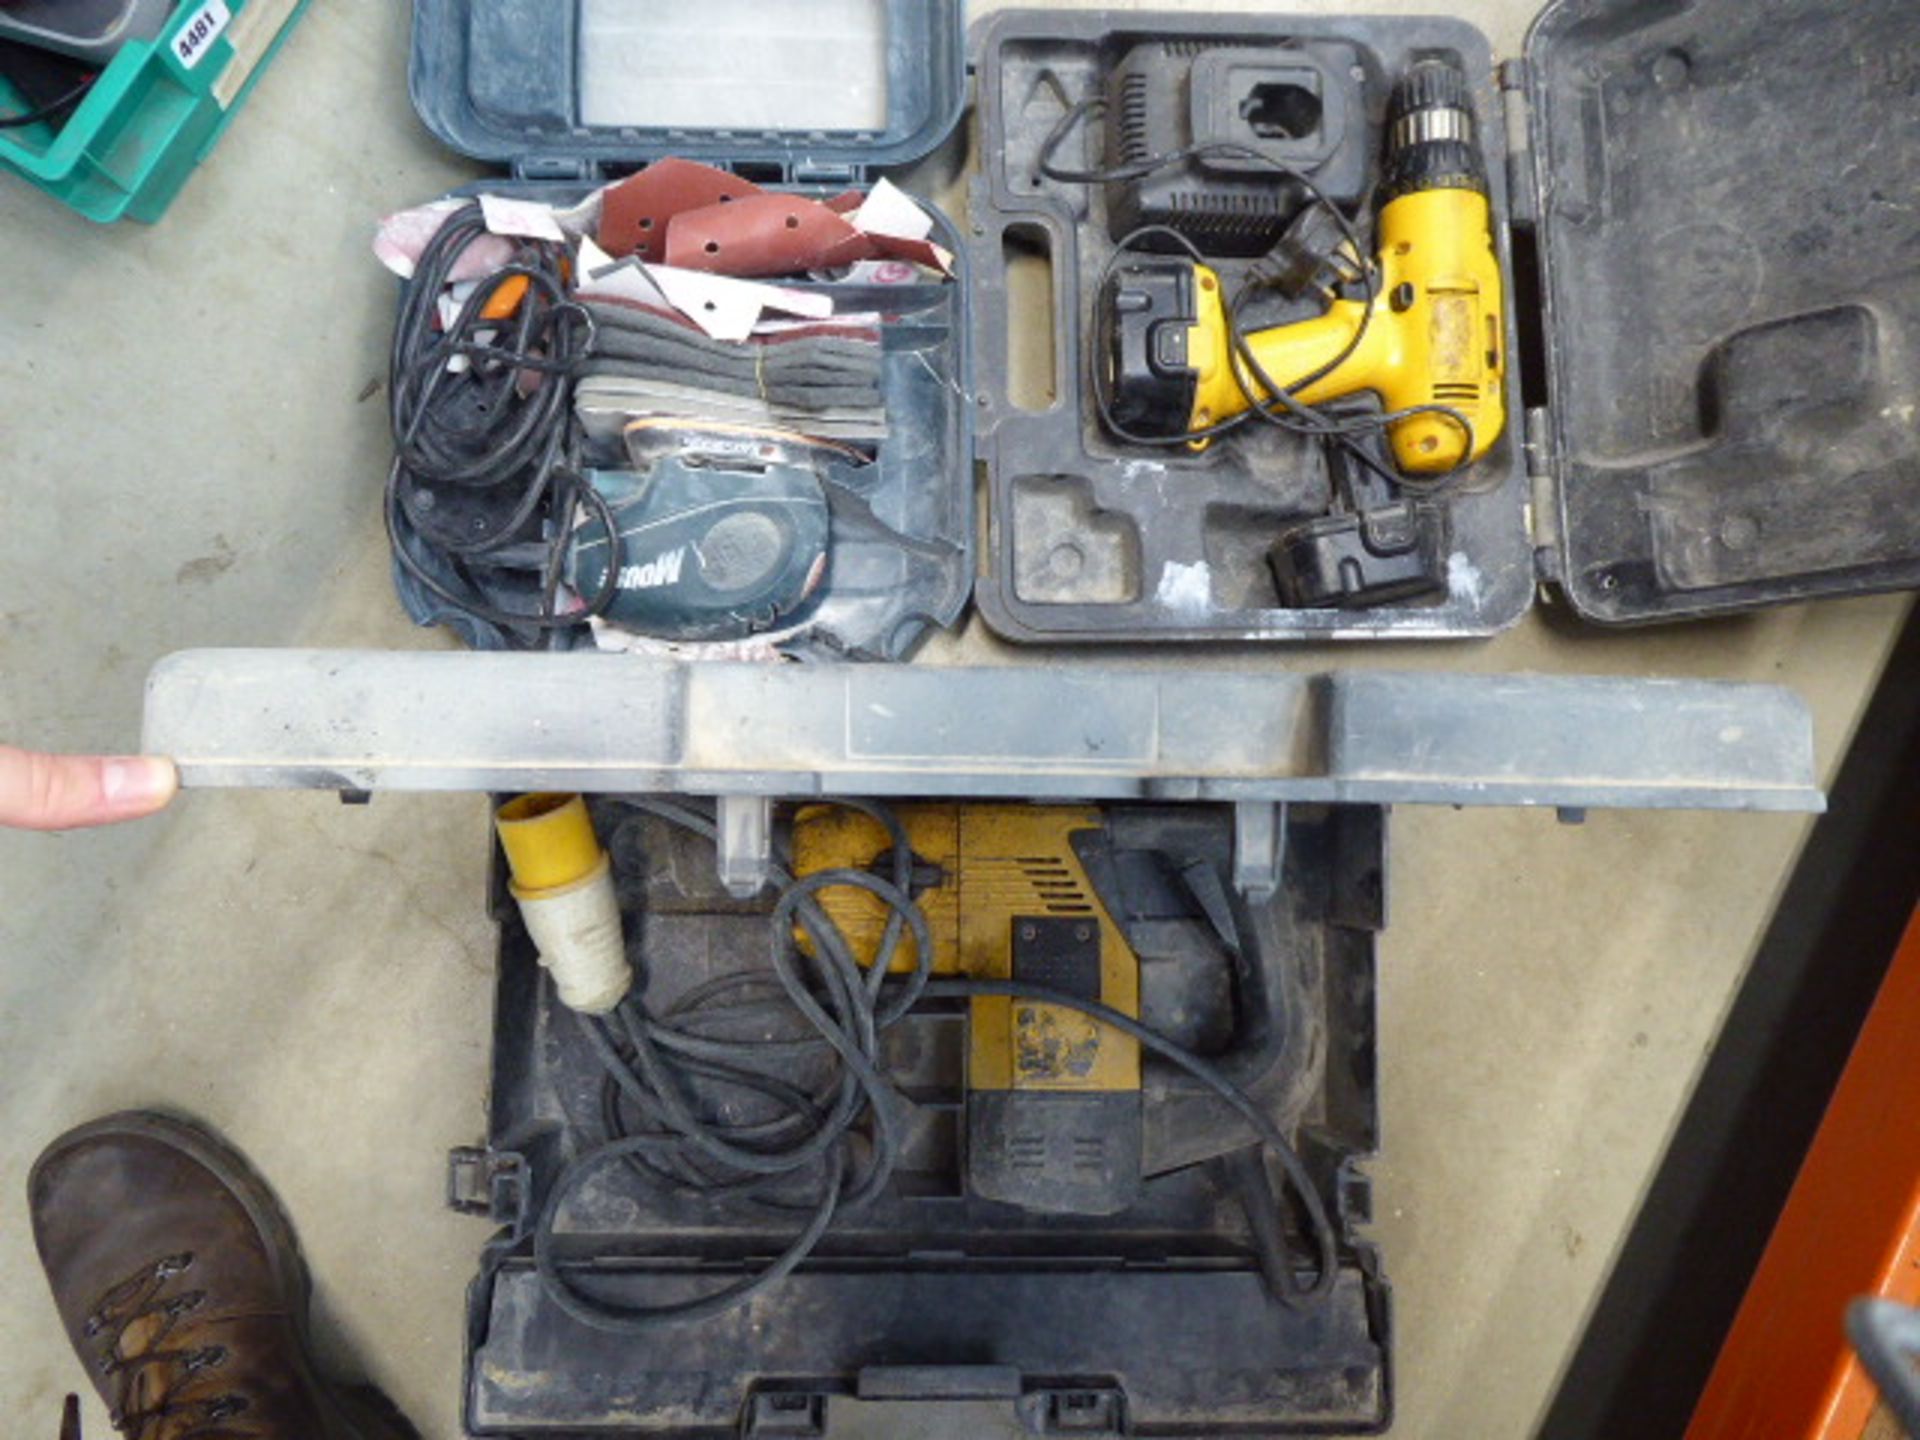 Kango 110v breaker, Black and Decker sander, Dewalt battery drill with 1 battery and charger